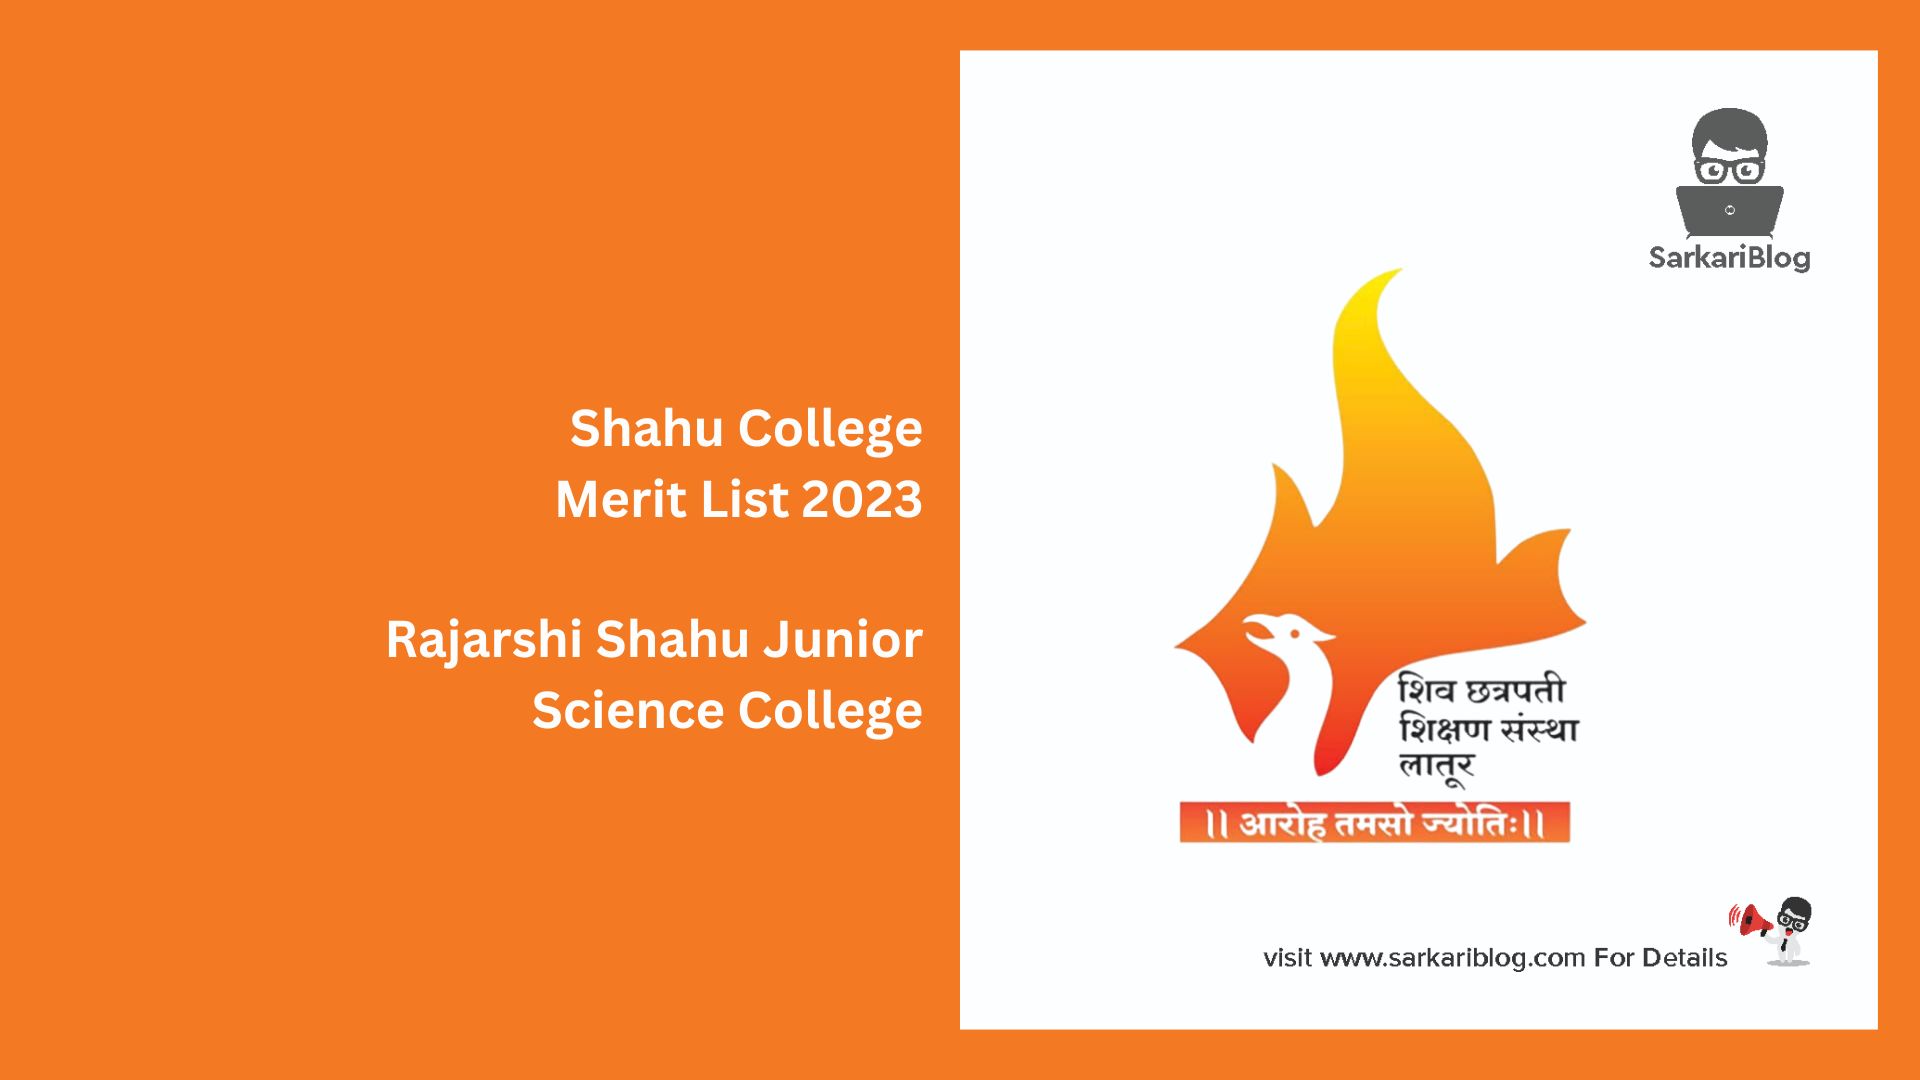 Shahu College Merit List 2023